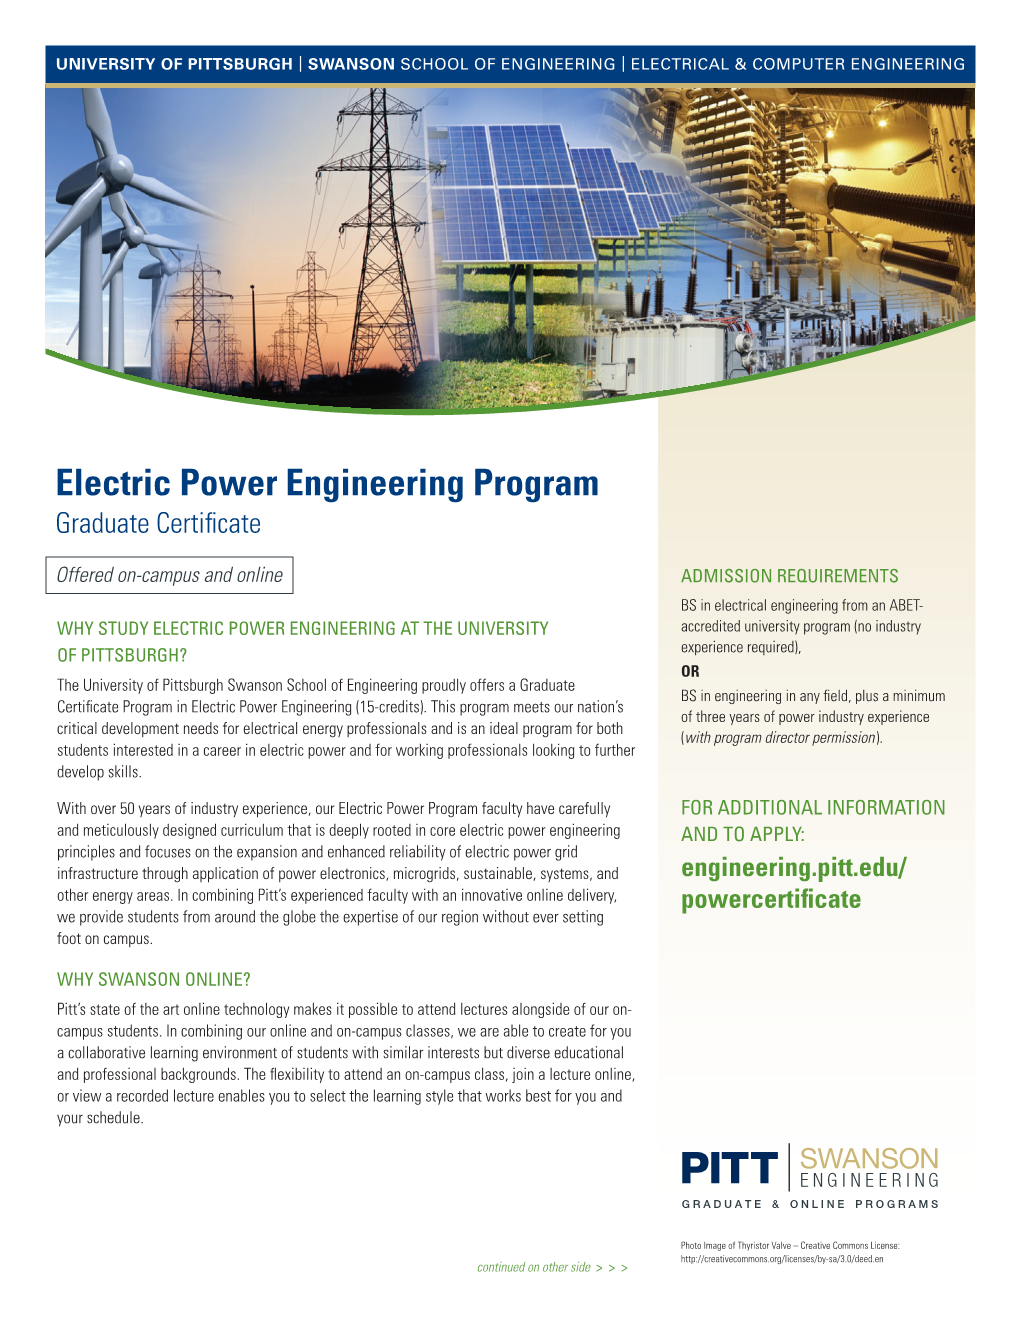 Electric Power Engineering Program Graduate Certificate